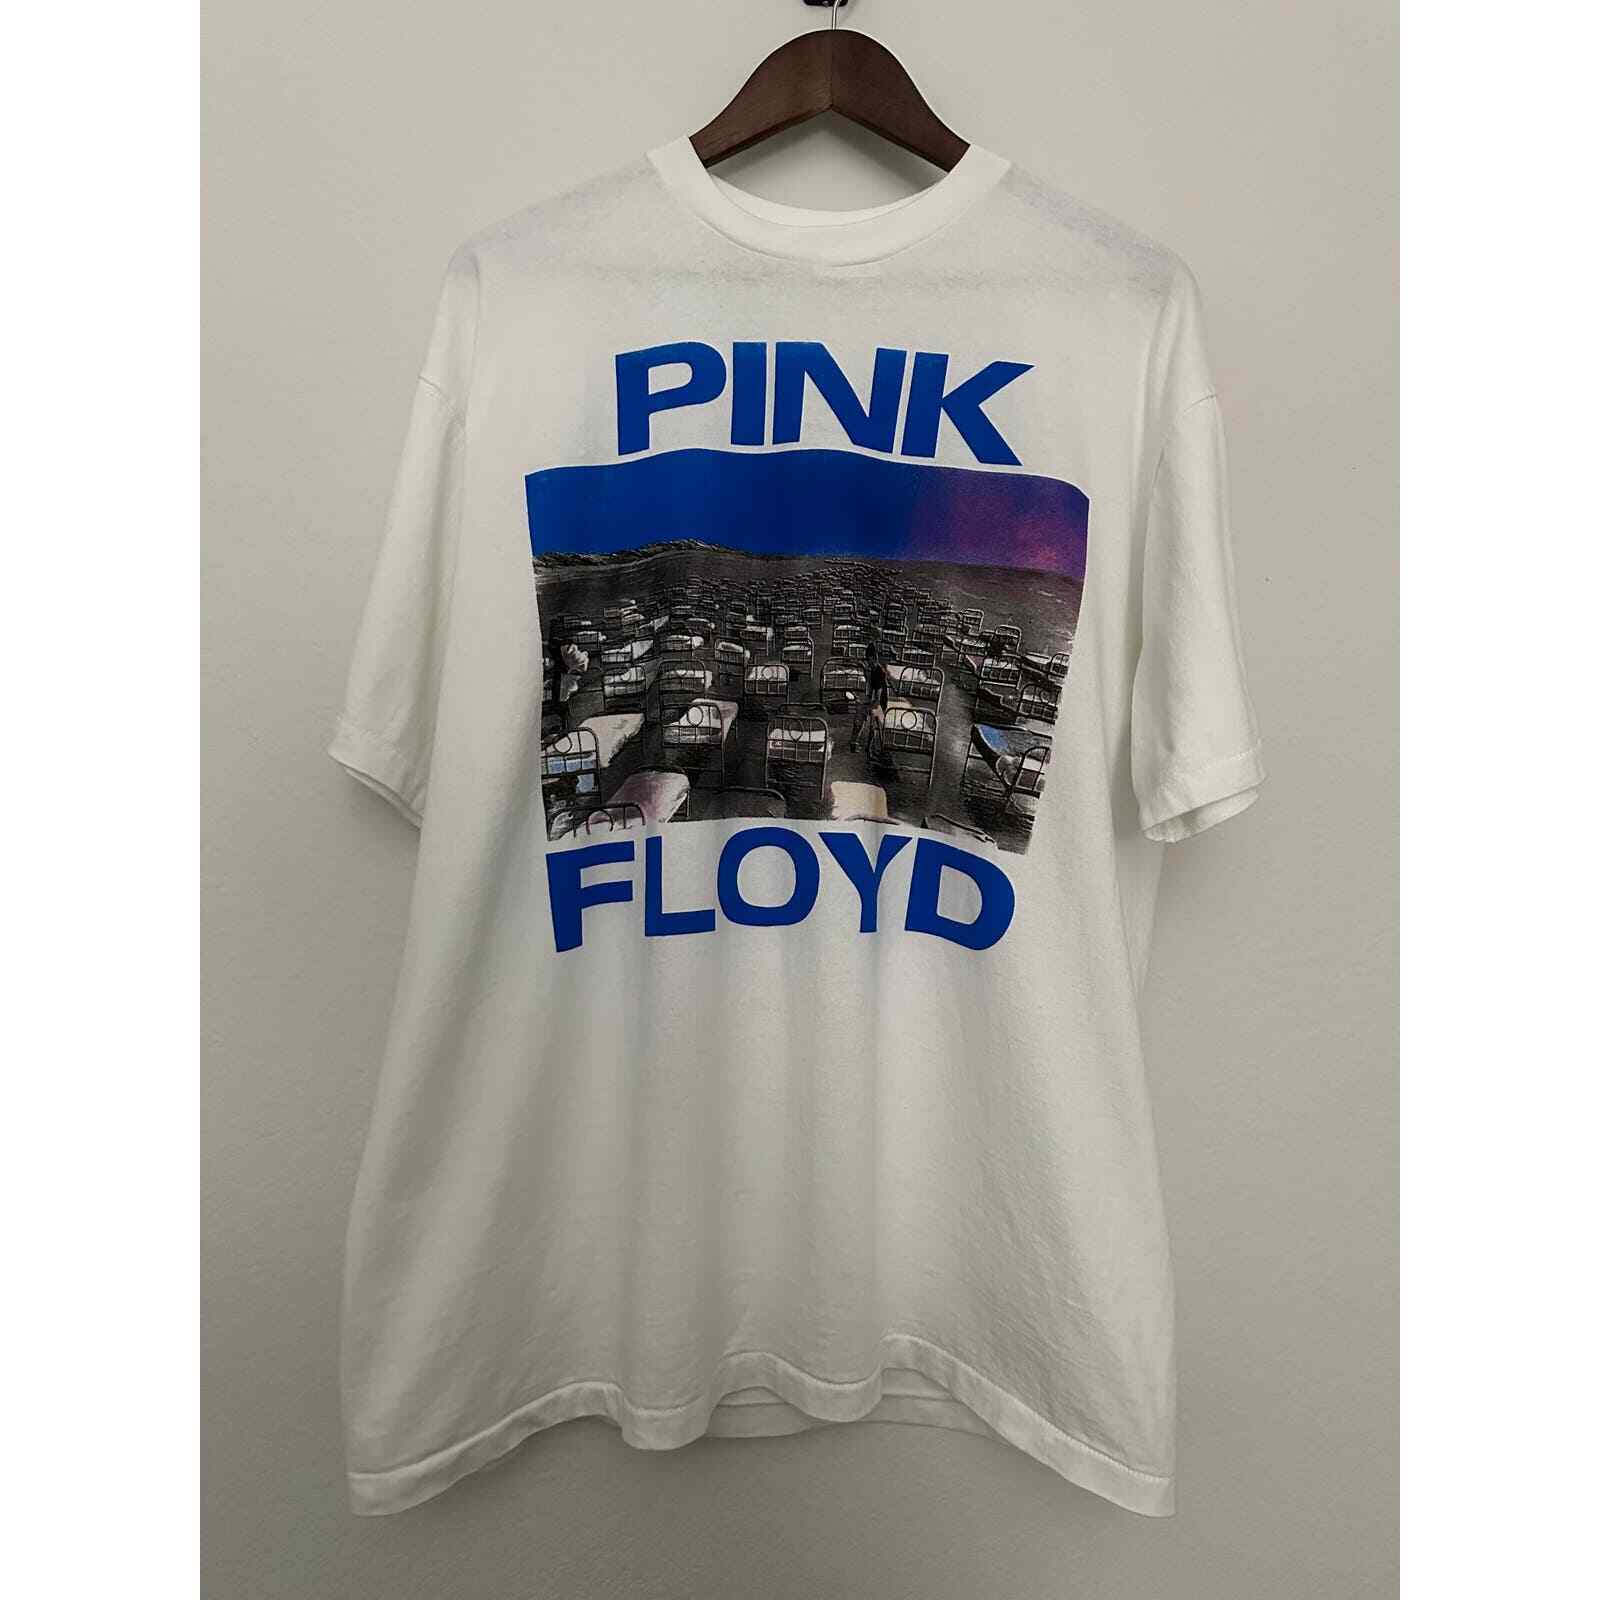 Pink Floyd "World Tour 88" Vintage Reprint Single Stitch T-shirt Sof Tee Tag